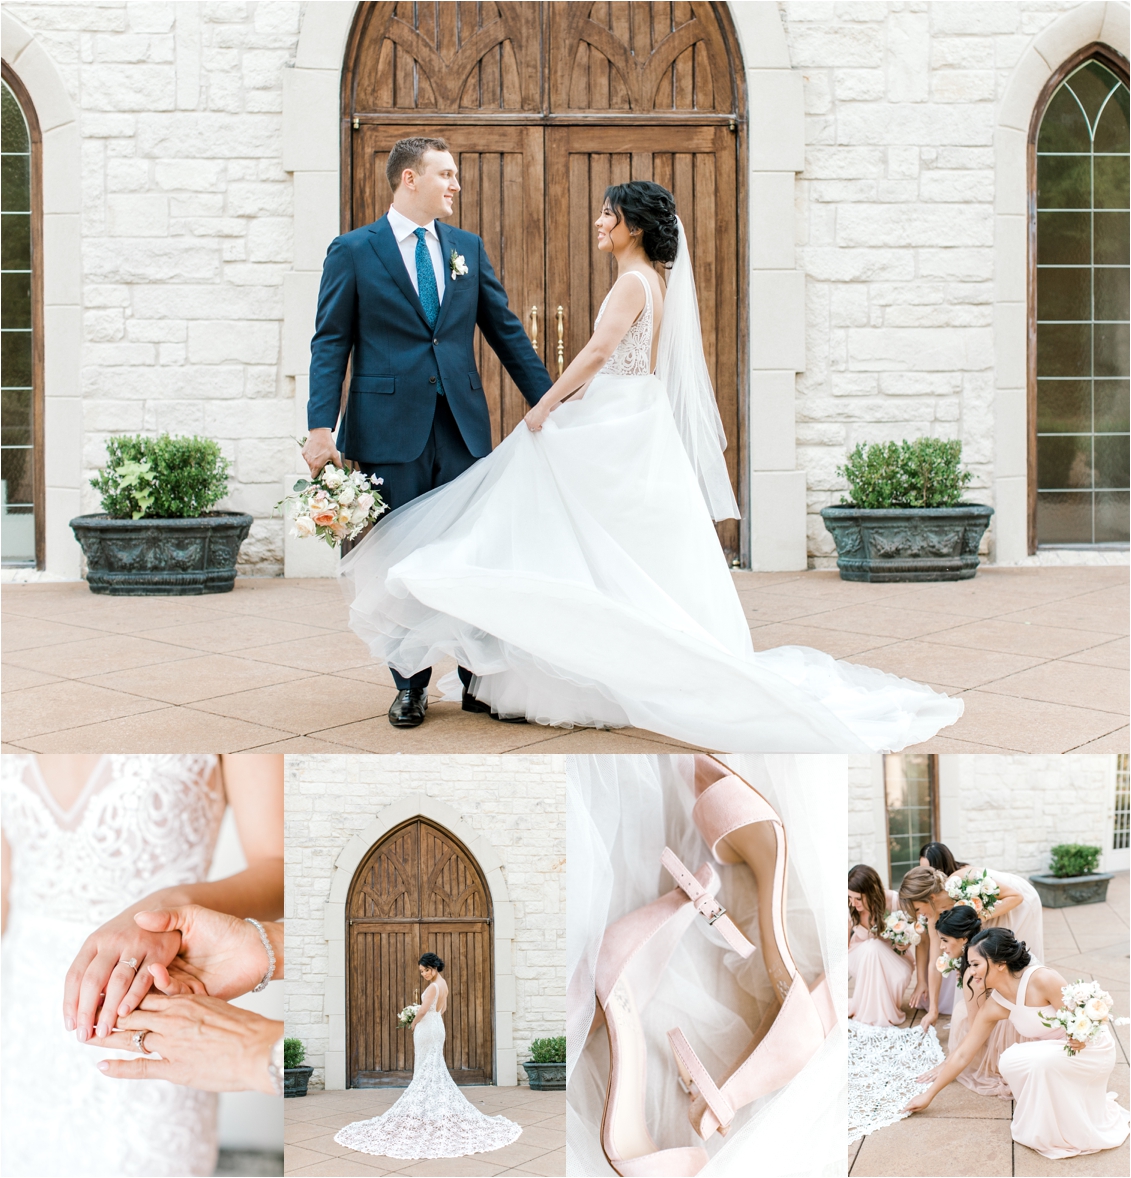 Ashton Gardens Wedding Day by Gaby Caskey Photography, Ashton Gardens, Dallas Fort Worth chapel wedding venue, Texas wedding inspiration